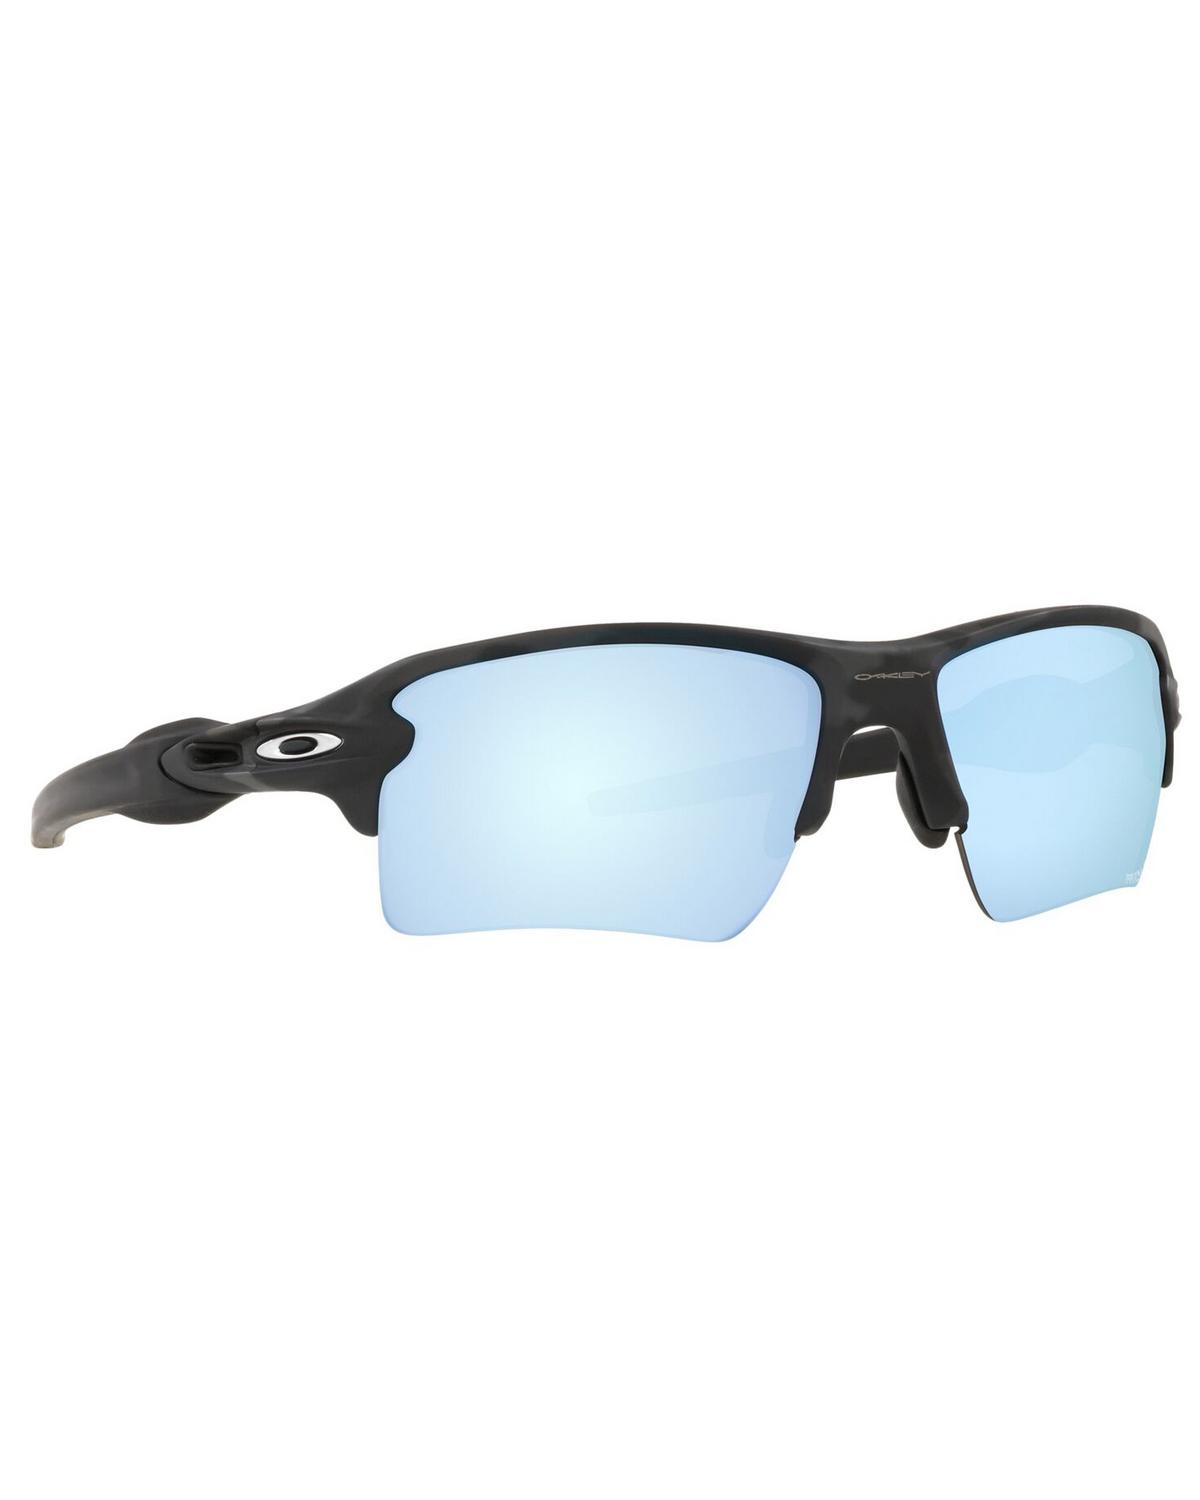 Oakley Flak 2.0 XL Sunglasses -  Blue